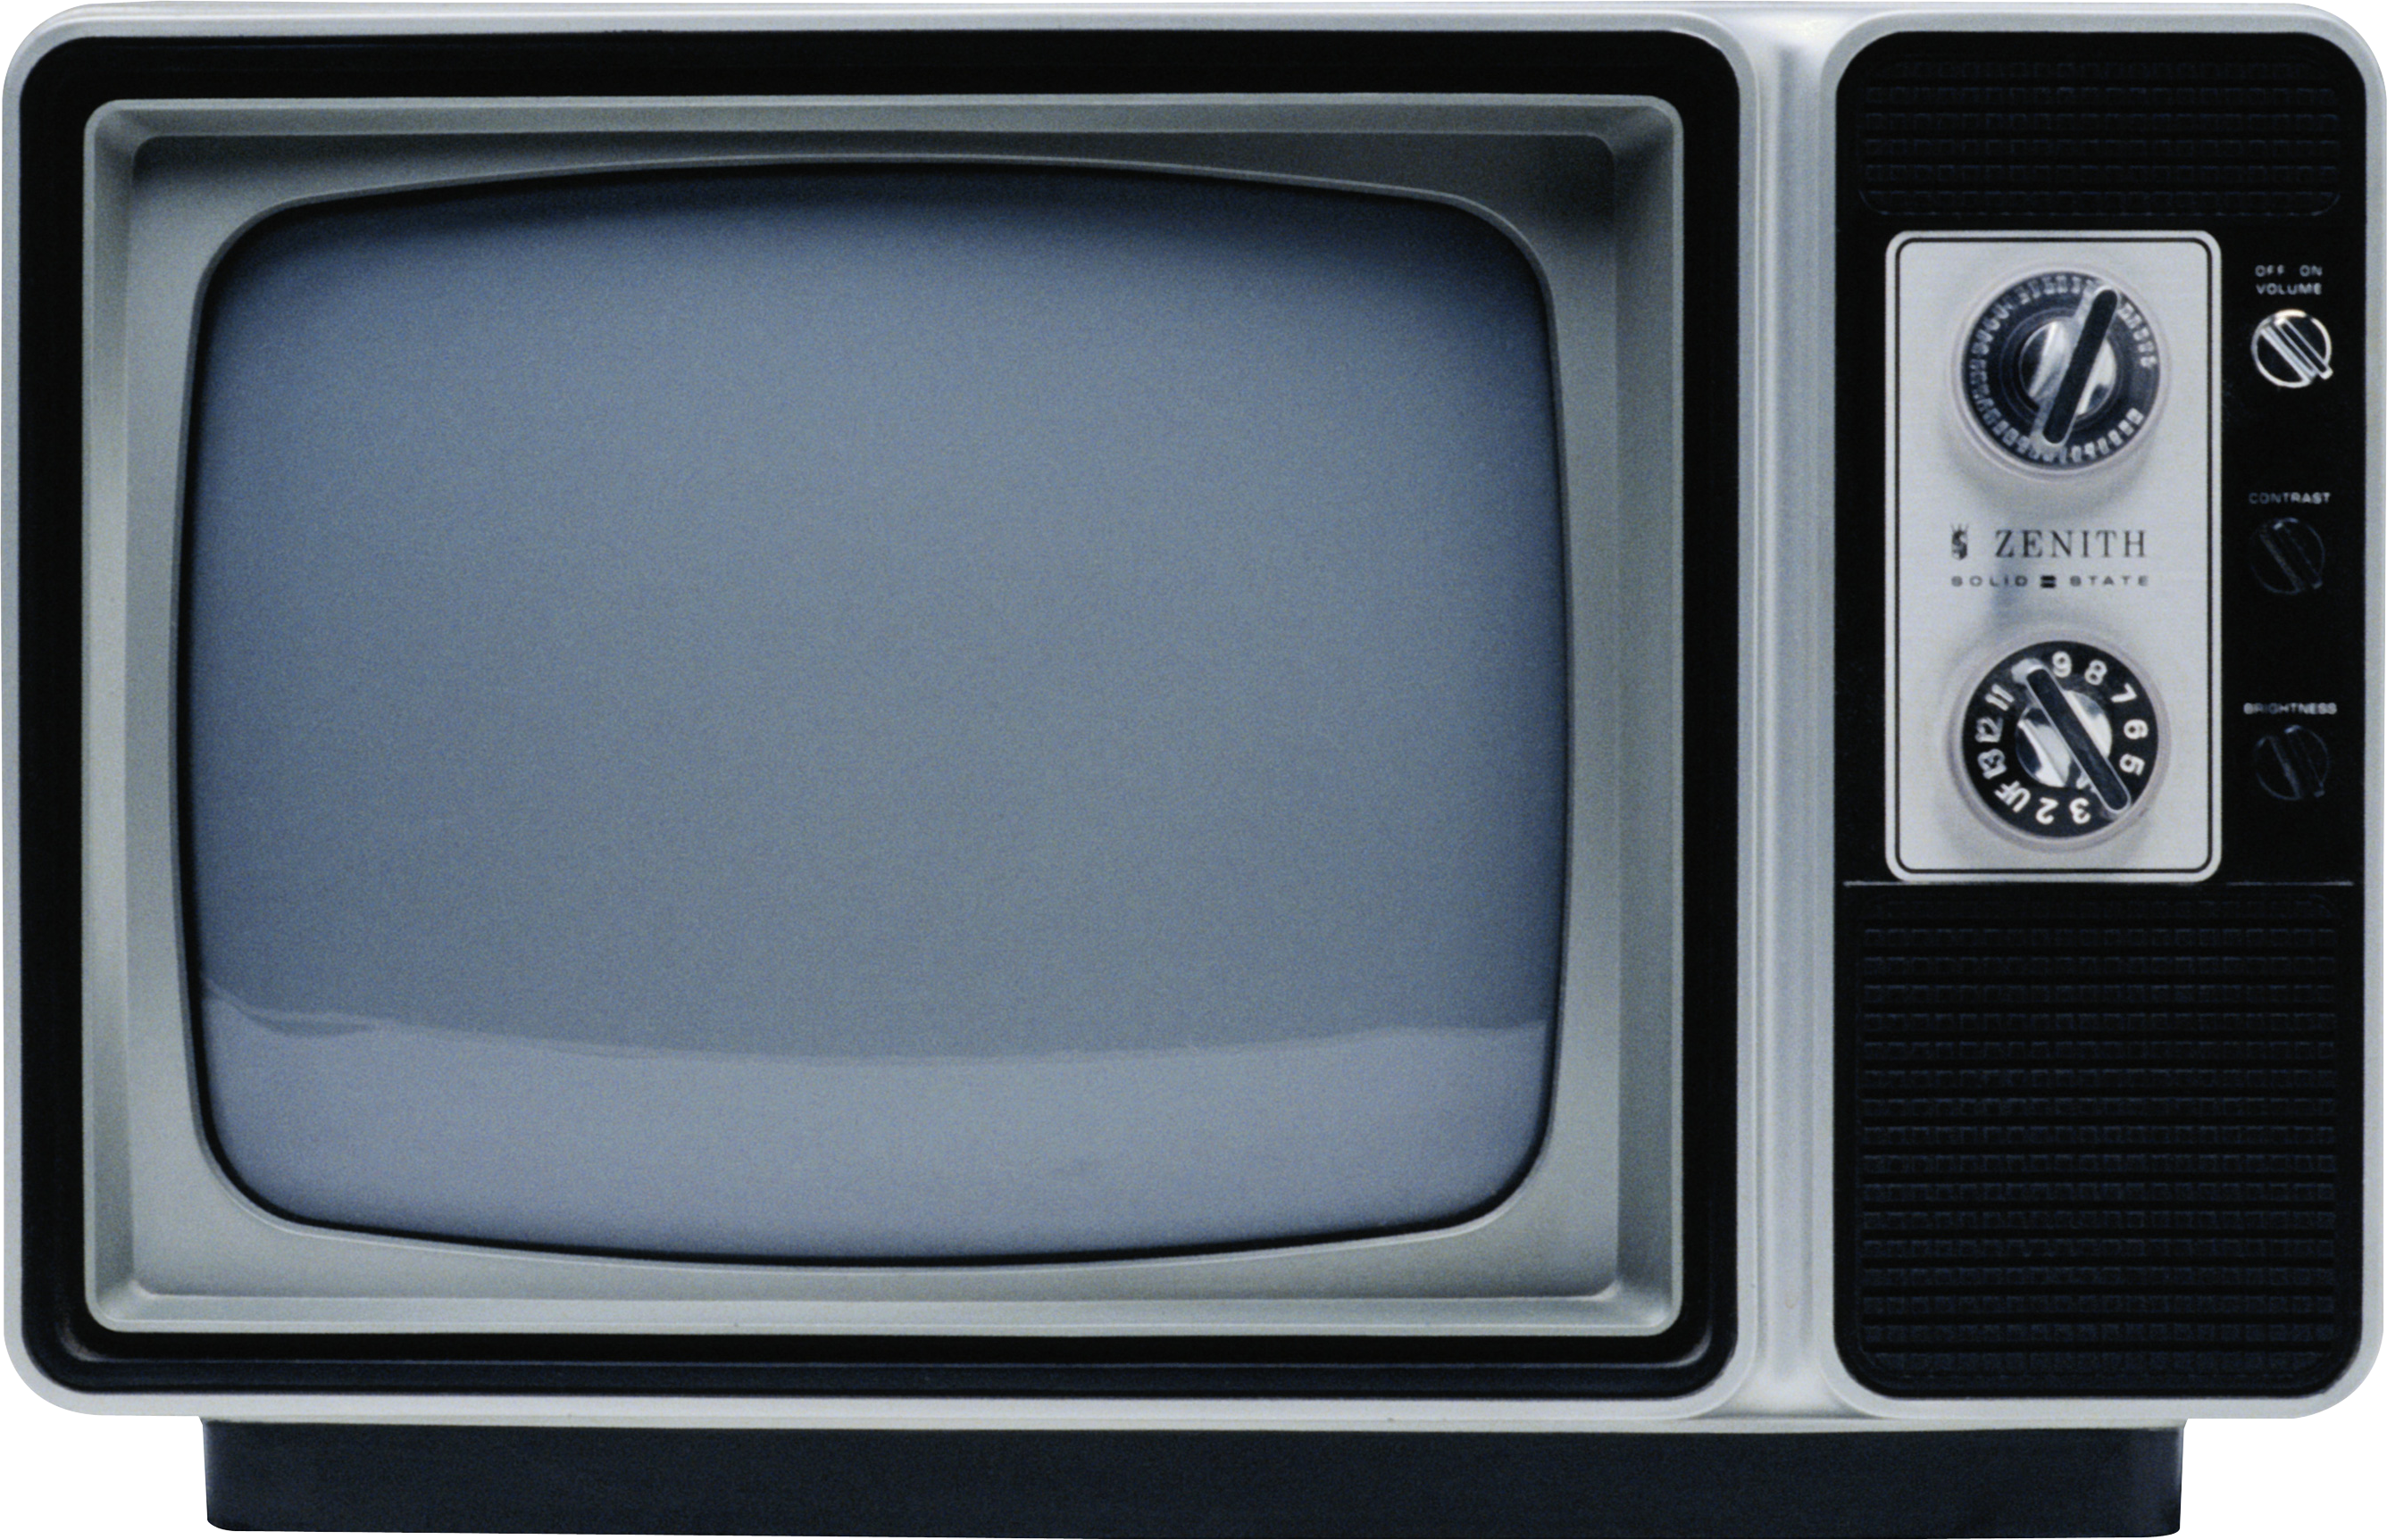 Tv old 2. Старый телевизор. Старинный телевизор. Ретро телевизор. Экран старого телевизора.